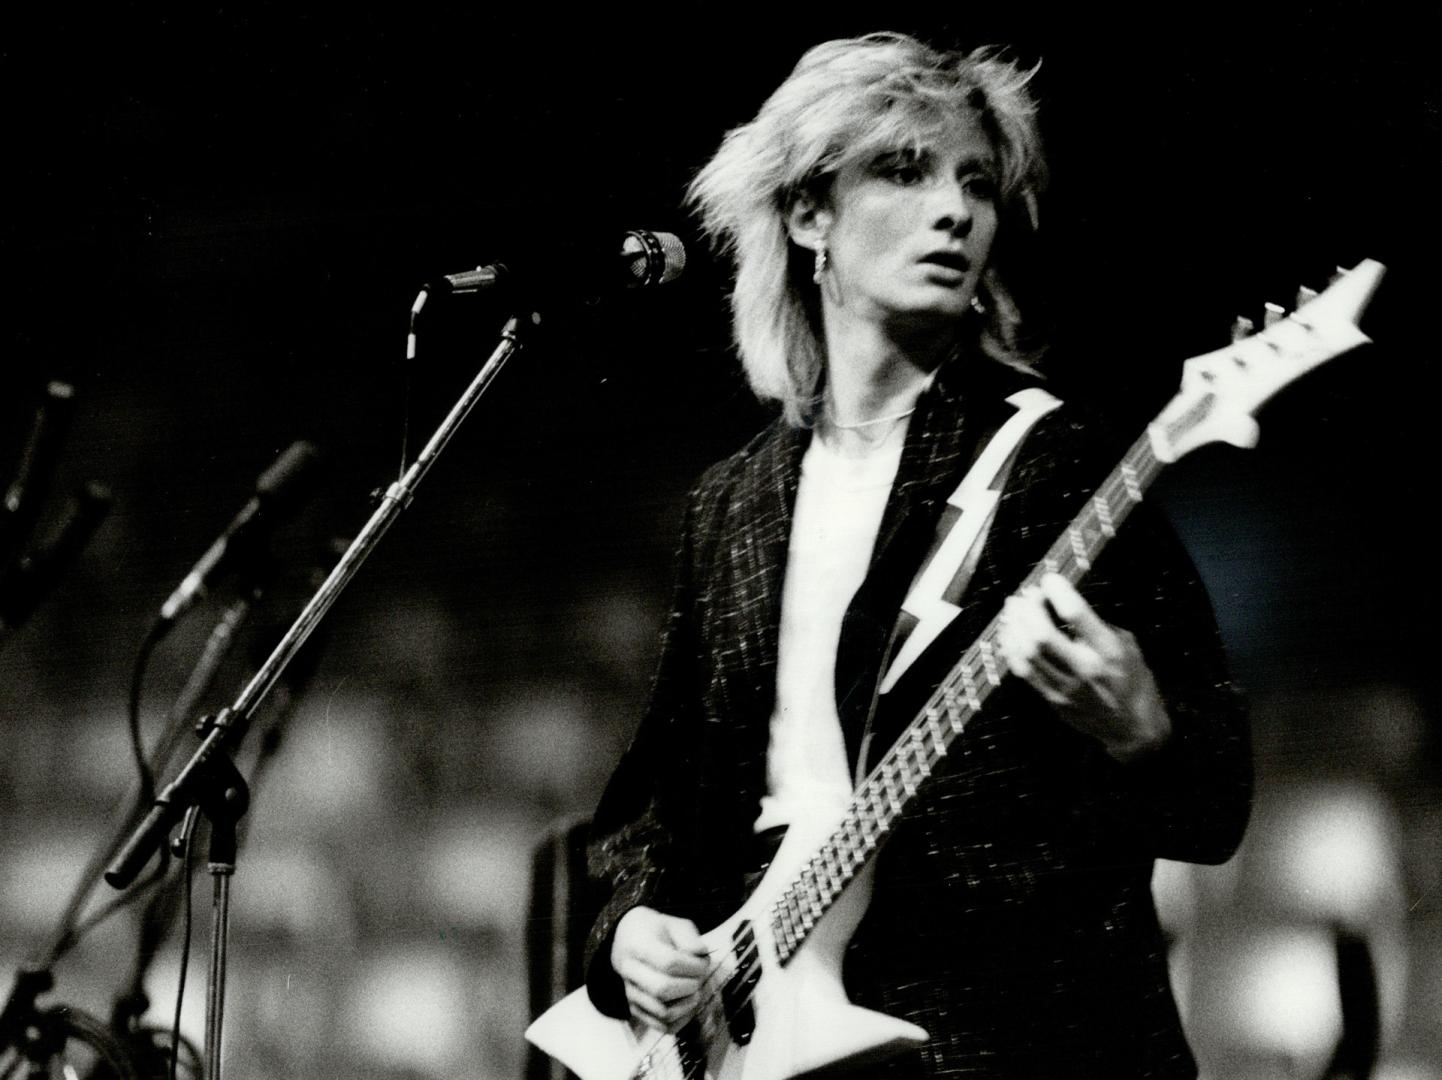 Rocking in 1985